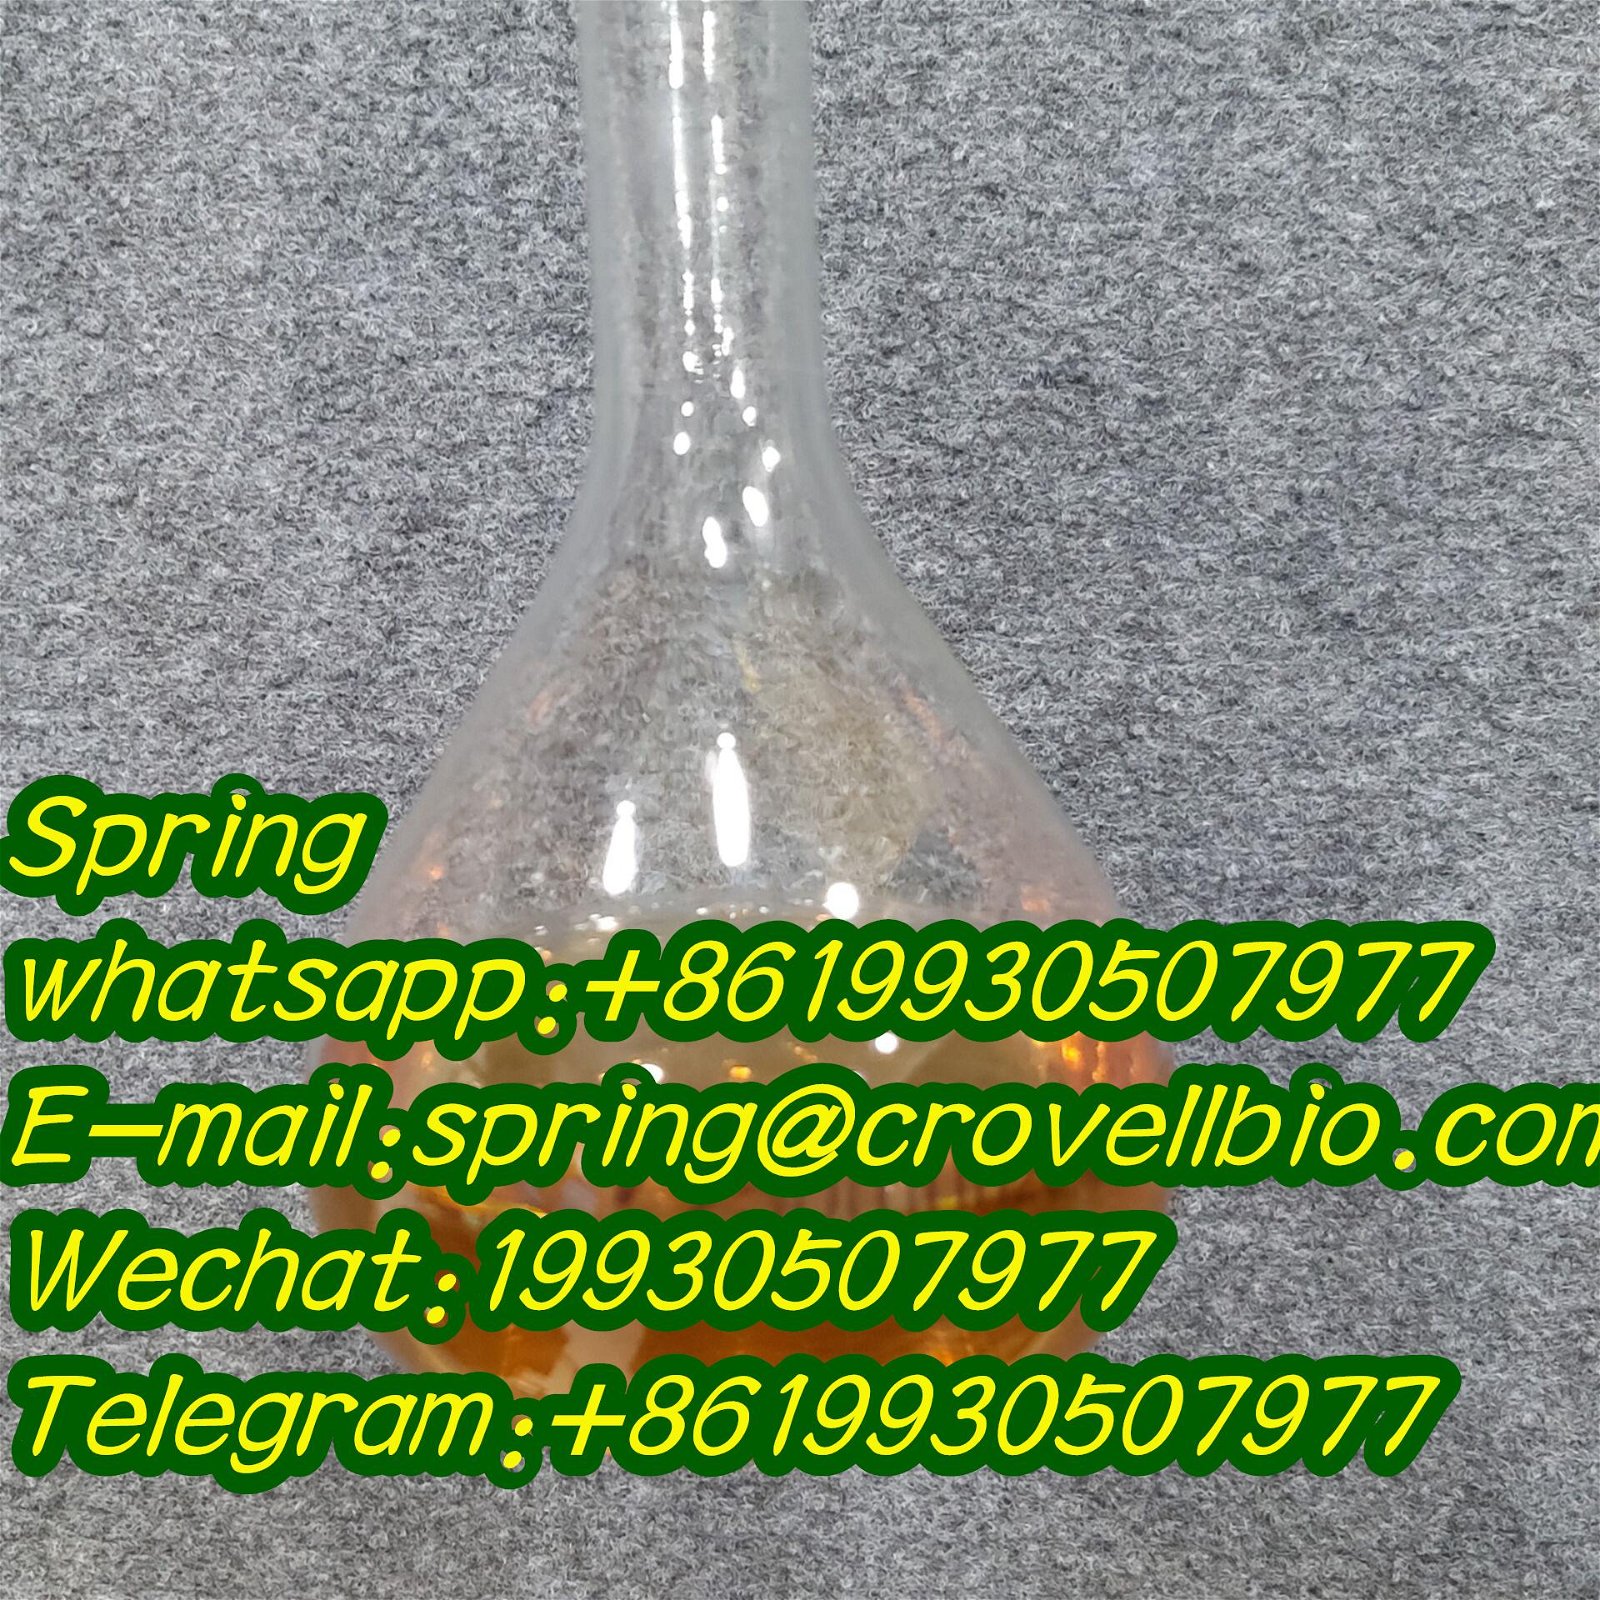 Buy Large stock Cinnamaldehyde China 104-55-2 from China Hebei +8619930507977 4